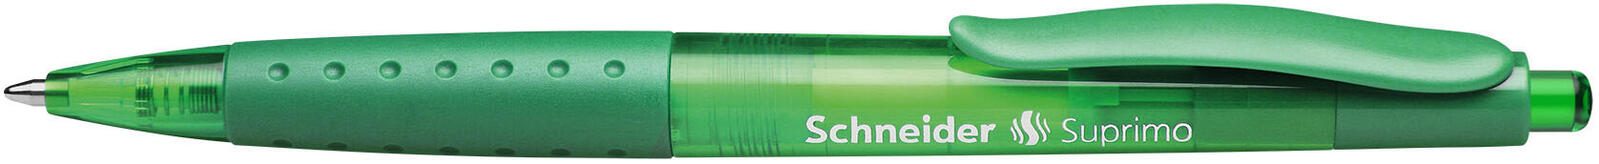 Schneider Kugelschreiber Kugelschrei Suprimo grün 0.6 mm Grün